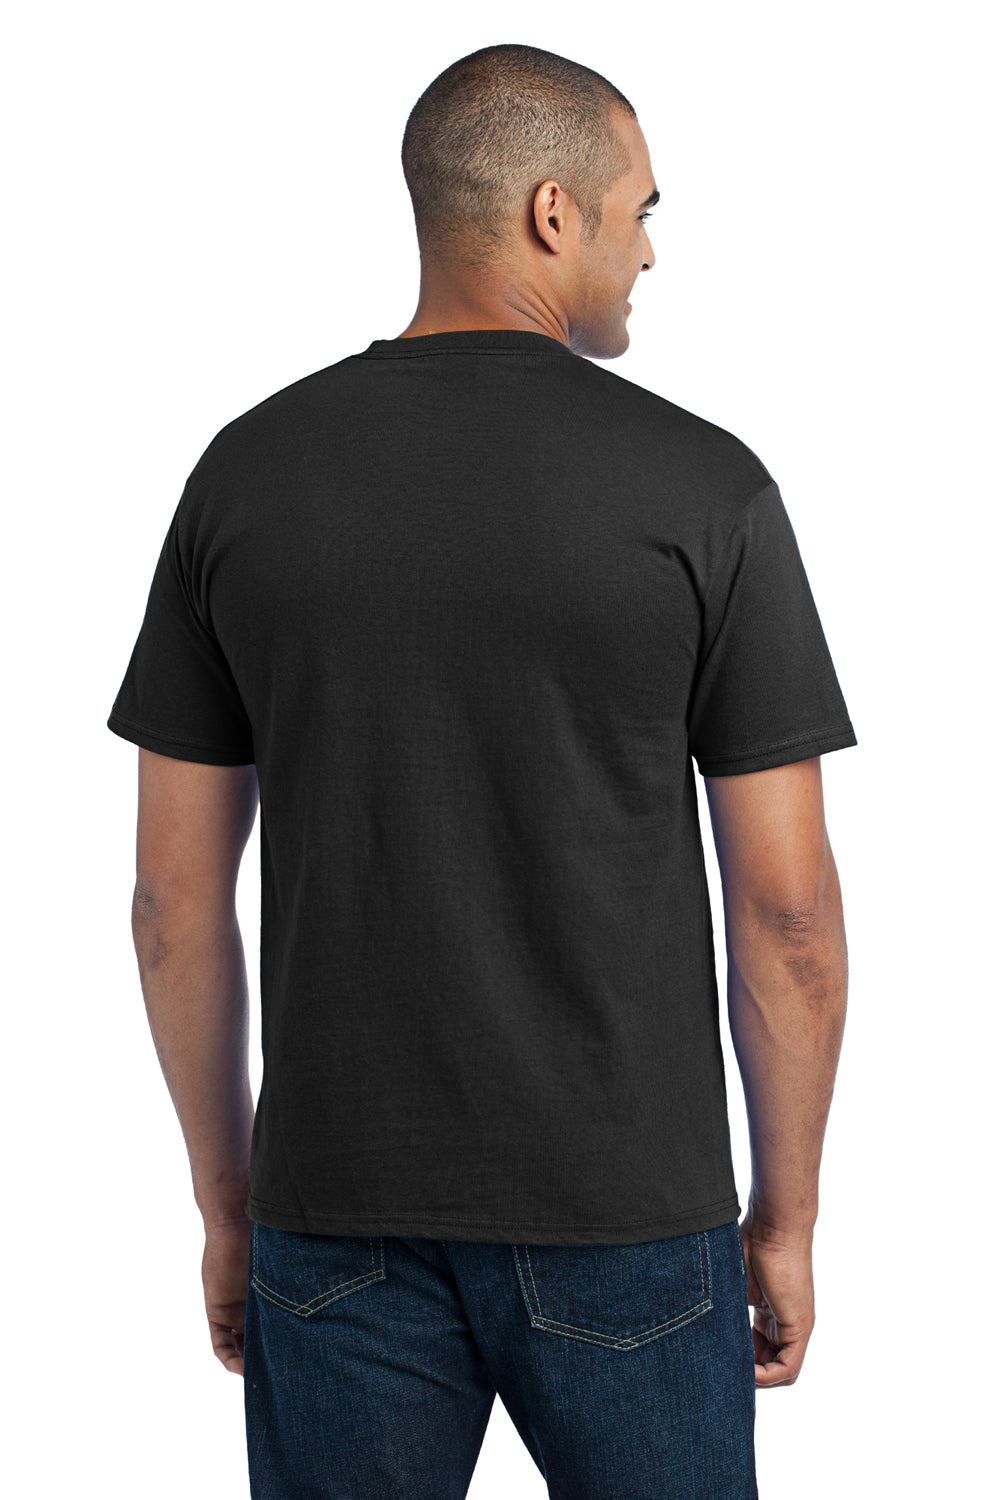 Port & Company PC55P Mens Core Short Sleeve Crewneck T-Shirt w/ Pocket Black Back